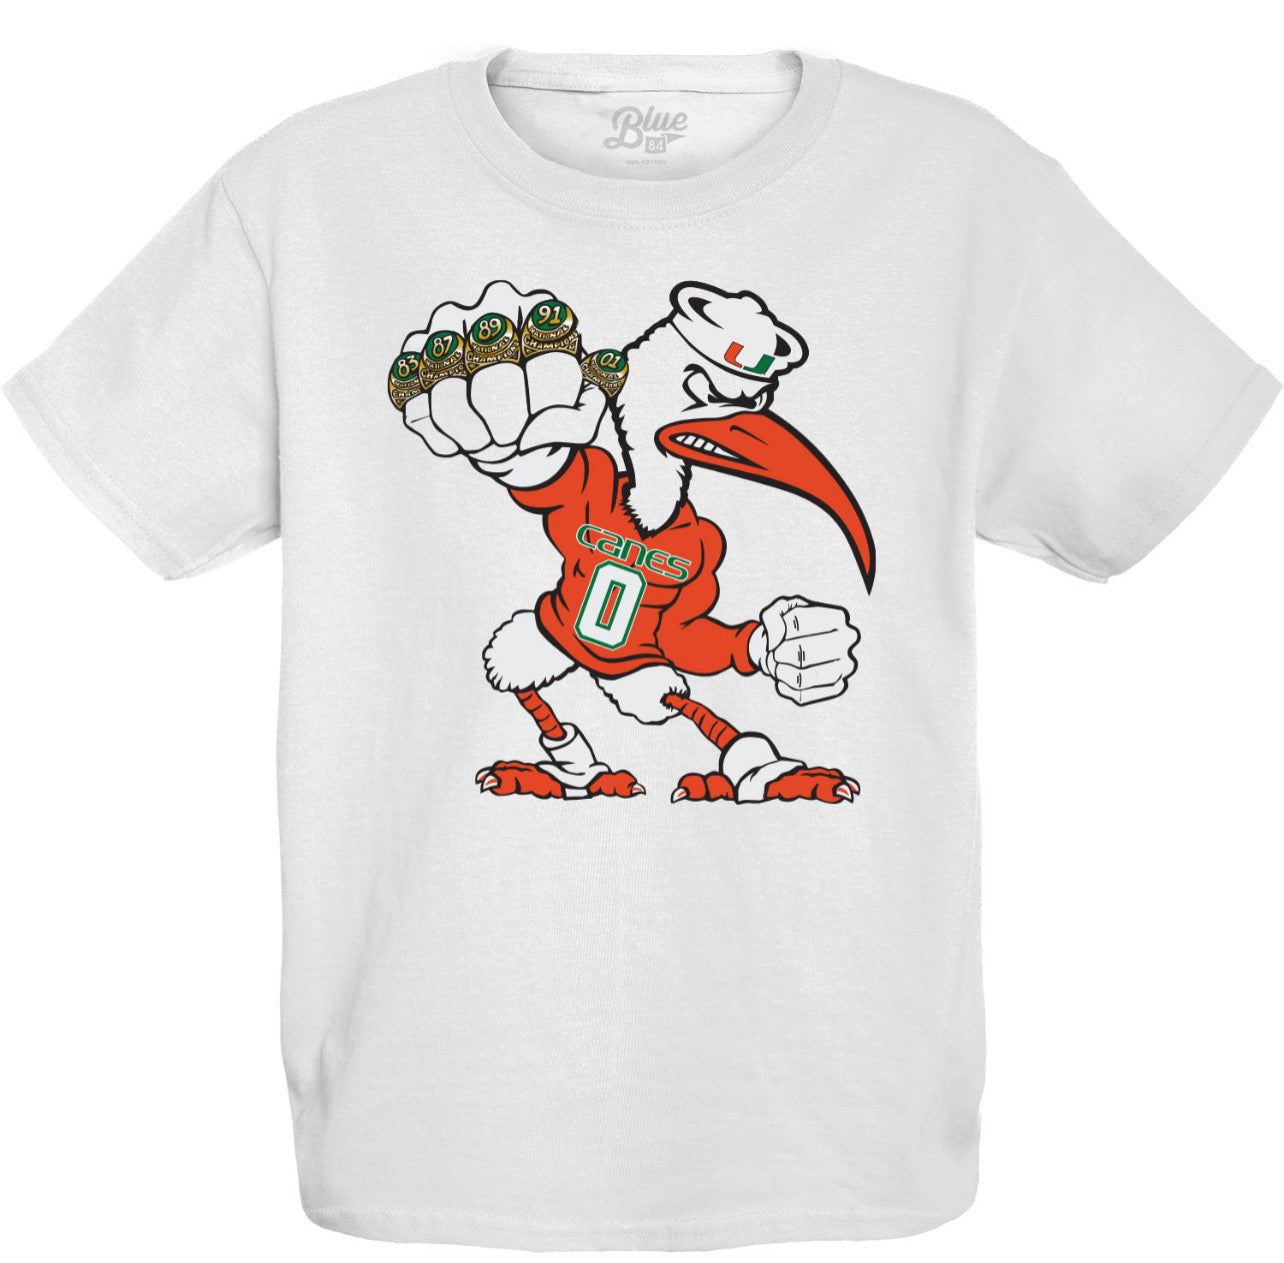 Smack Apparel Herro Ball T-Shirt for Miami Basketball Fans Short Sleeve / 4XL / White